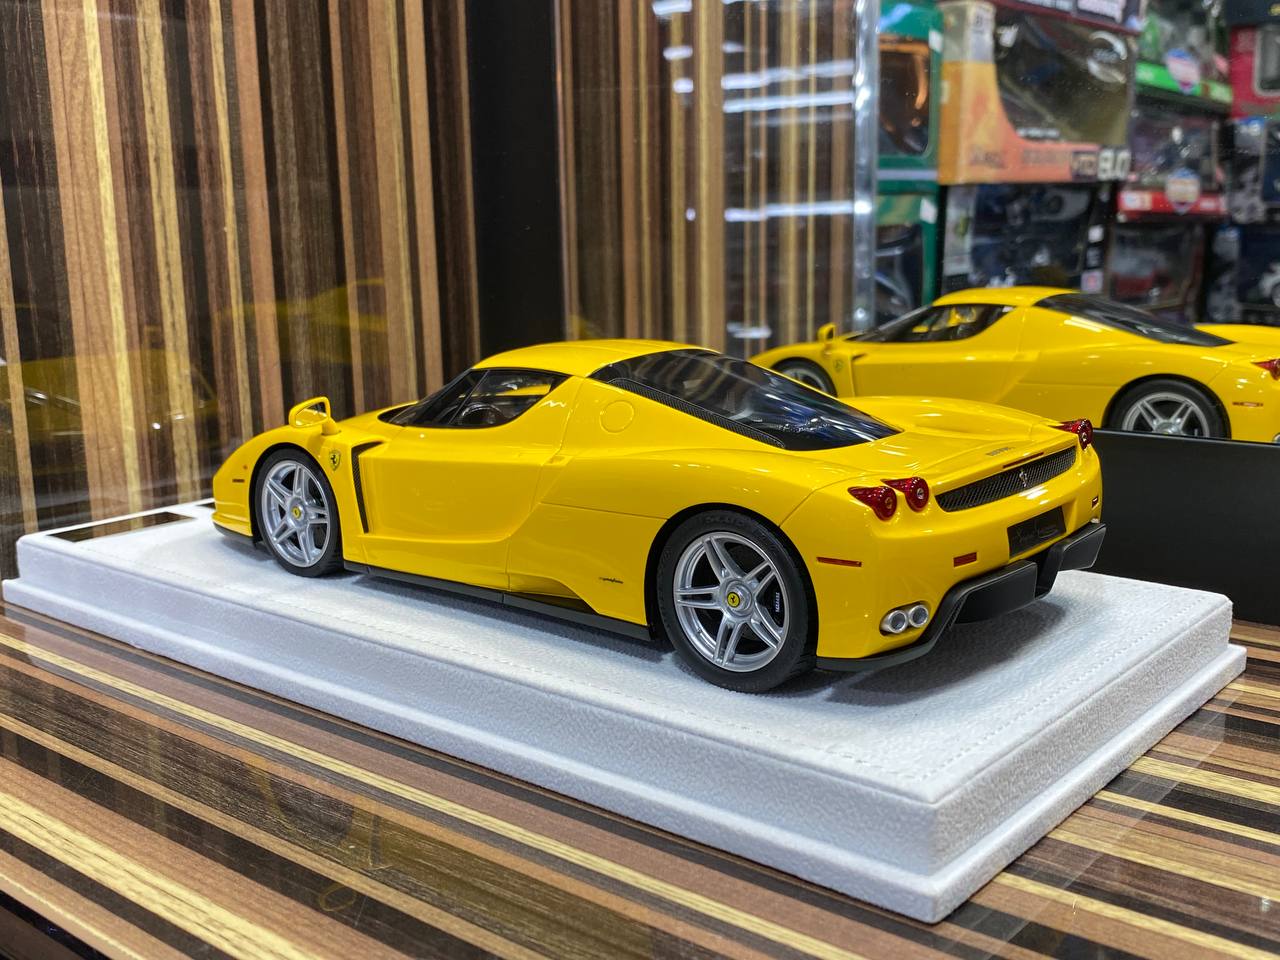 GAVIN Models Ferrari Enzo - Yellow (1/18 Resin Model) Miniature Car|Sold in Dturman.com Dubai UAE.